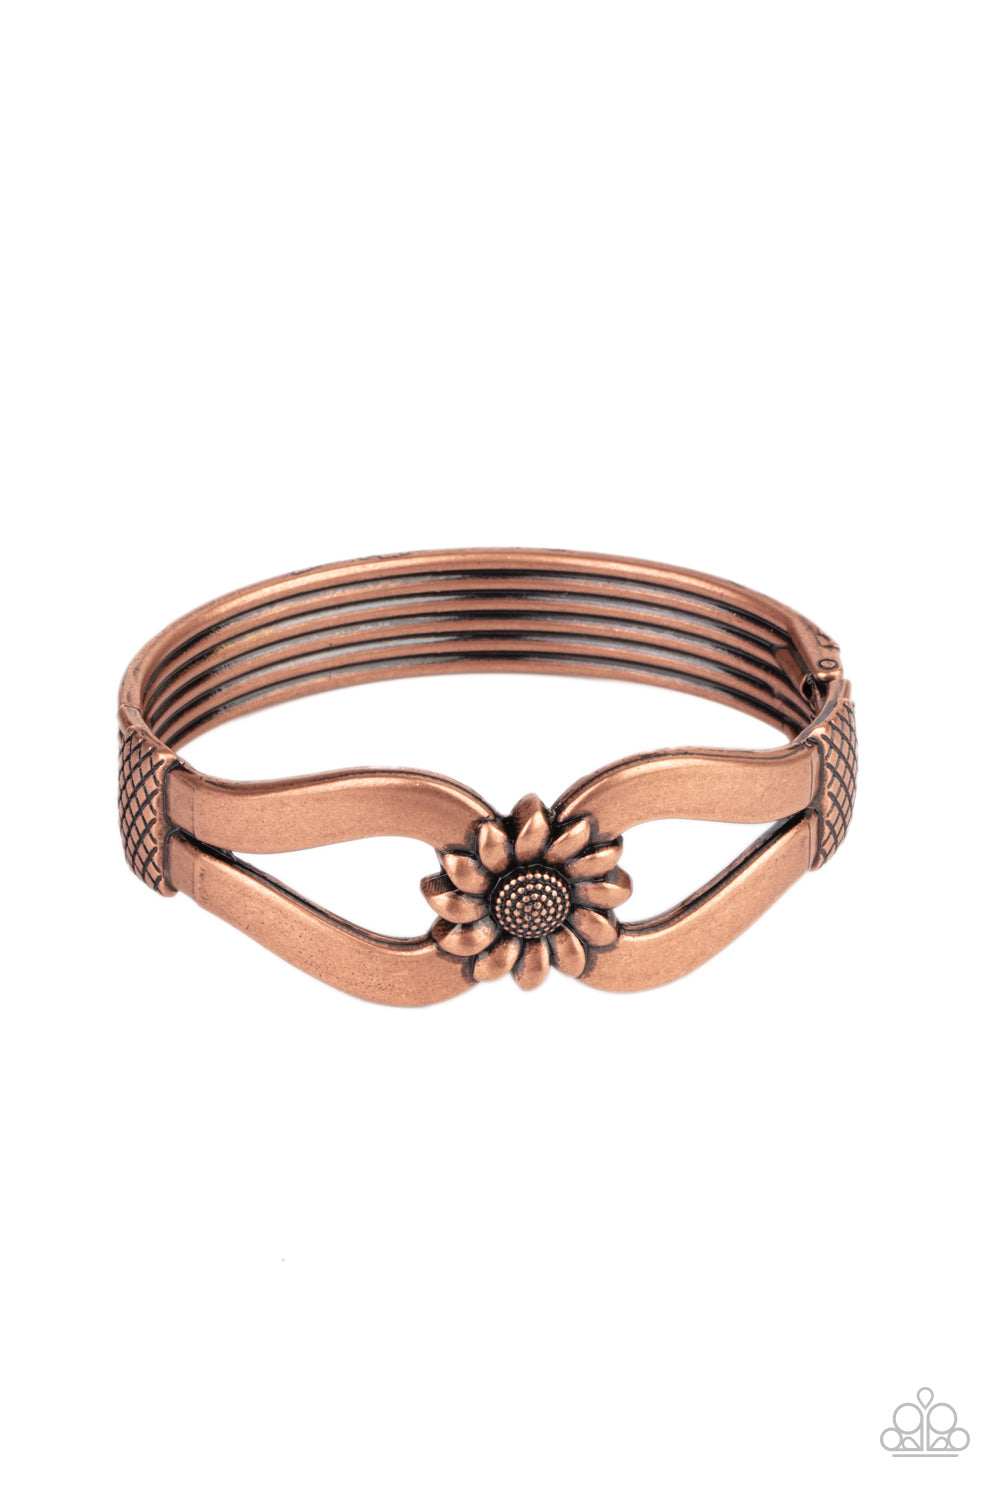 Let A Hundred SUNFLOWERS Bloom - Copper Bracelet freeshipping - JewLz4u Gemstone Gallery